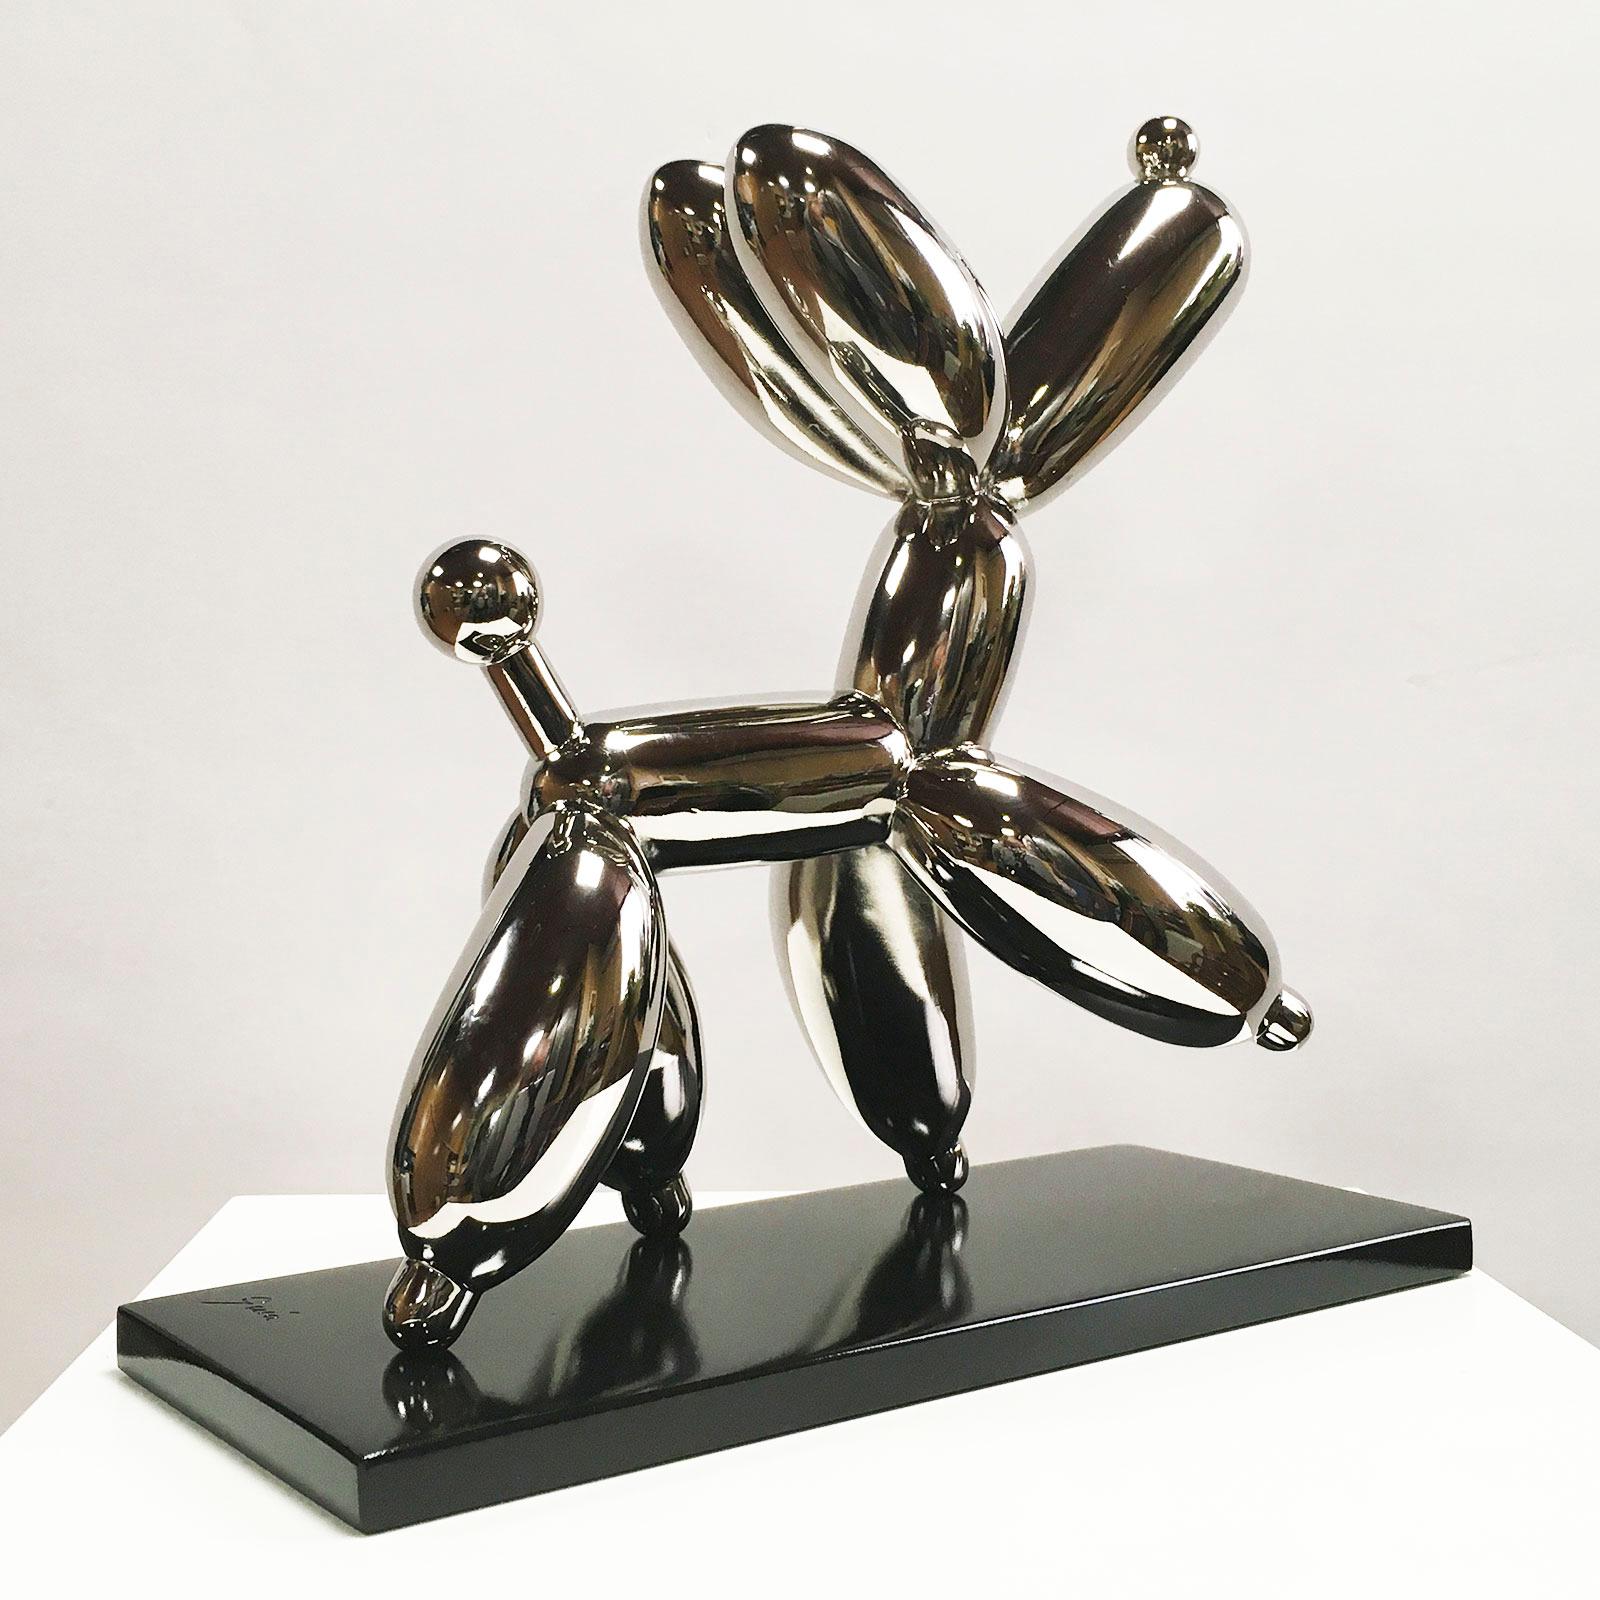 Smug dog - Miguel Guía, Pop Art Nickel layer Sculpture (choose finish color) 12